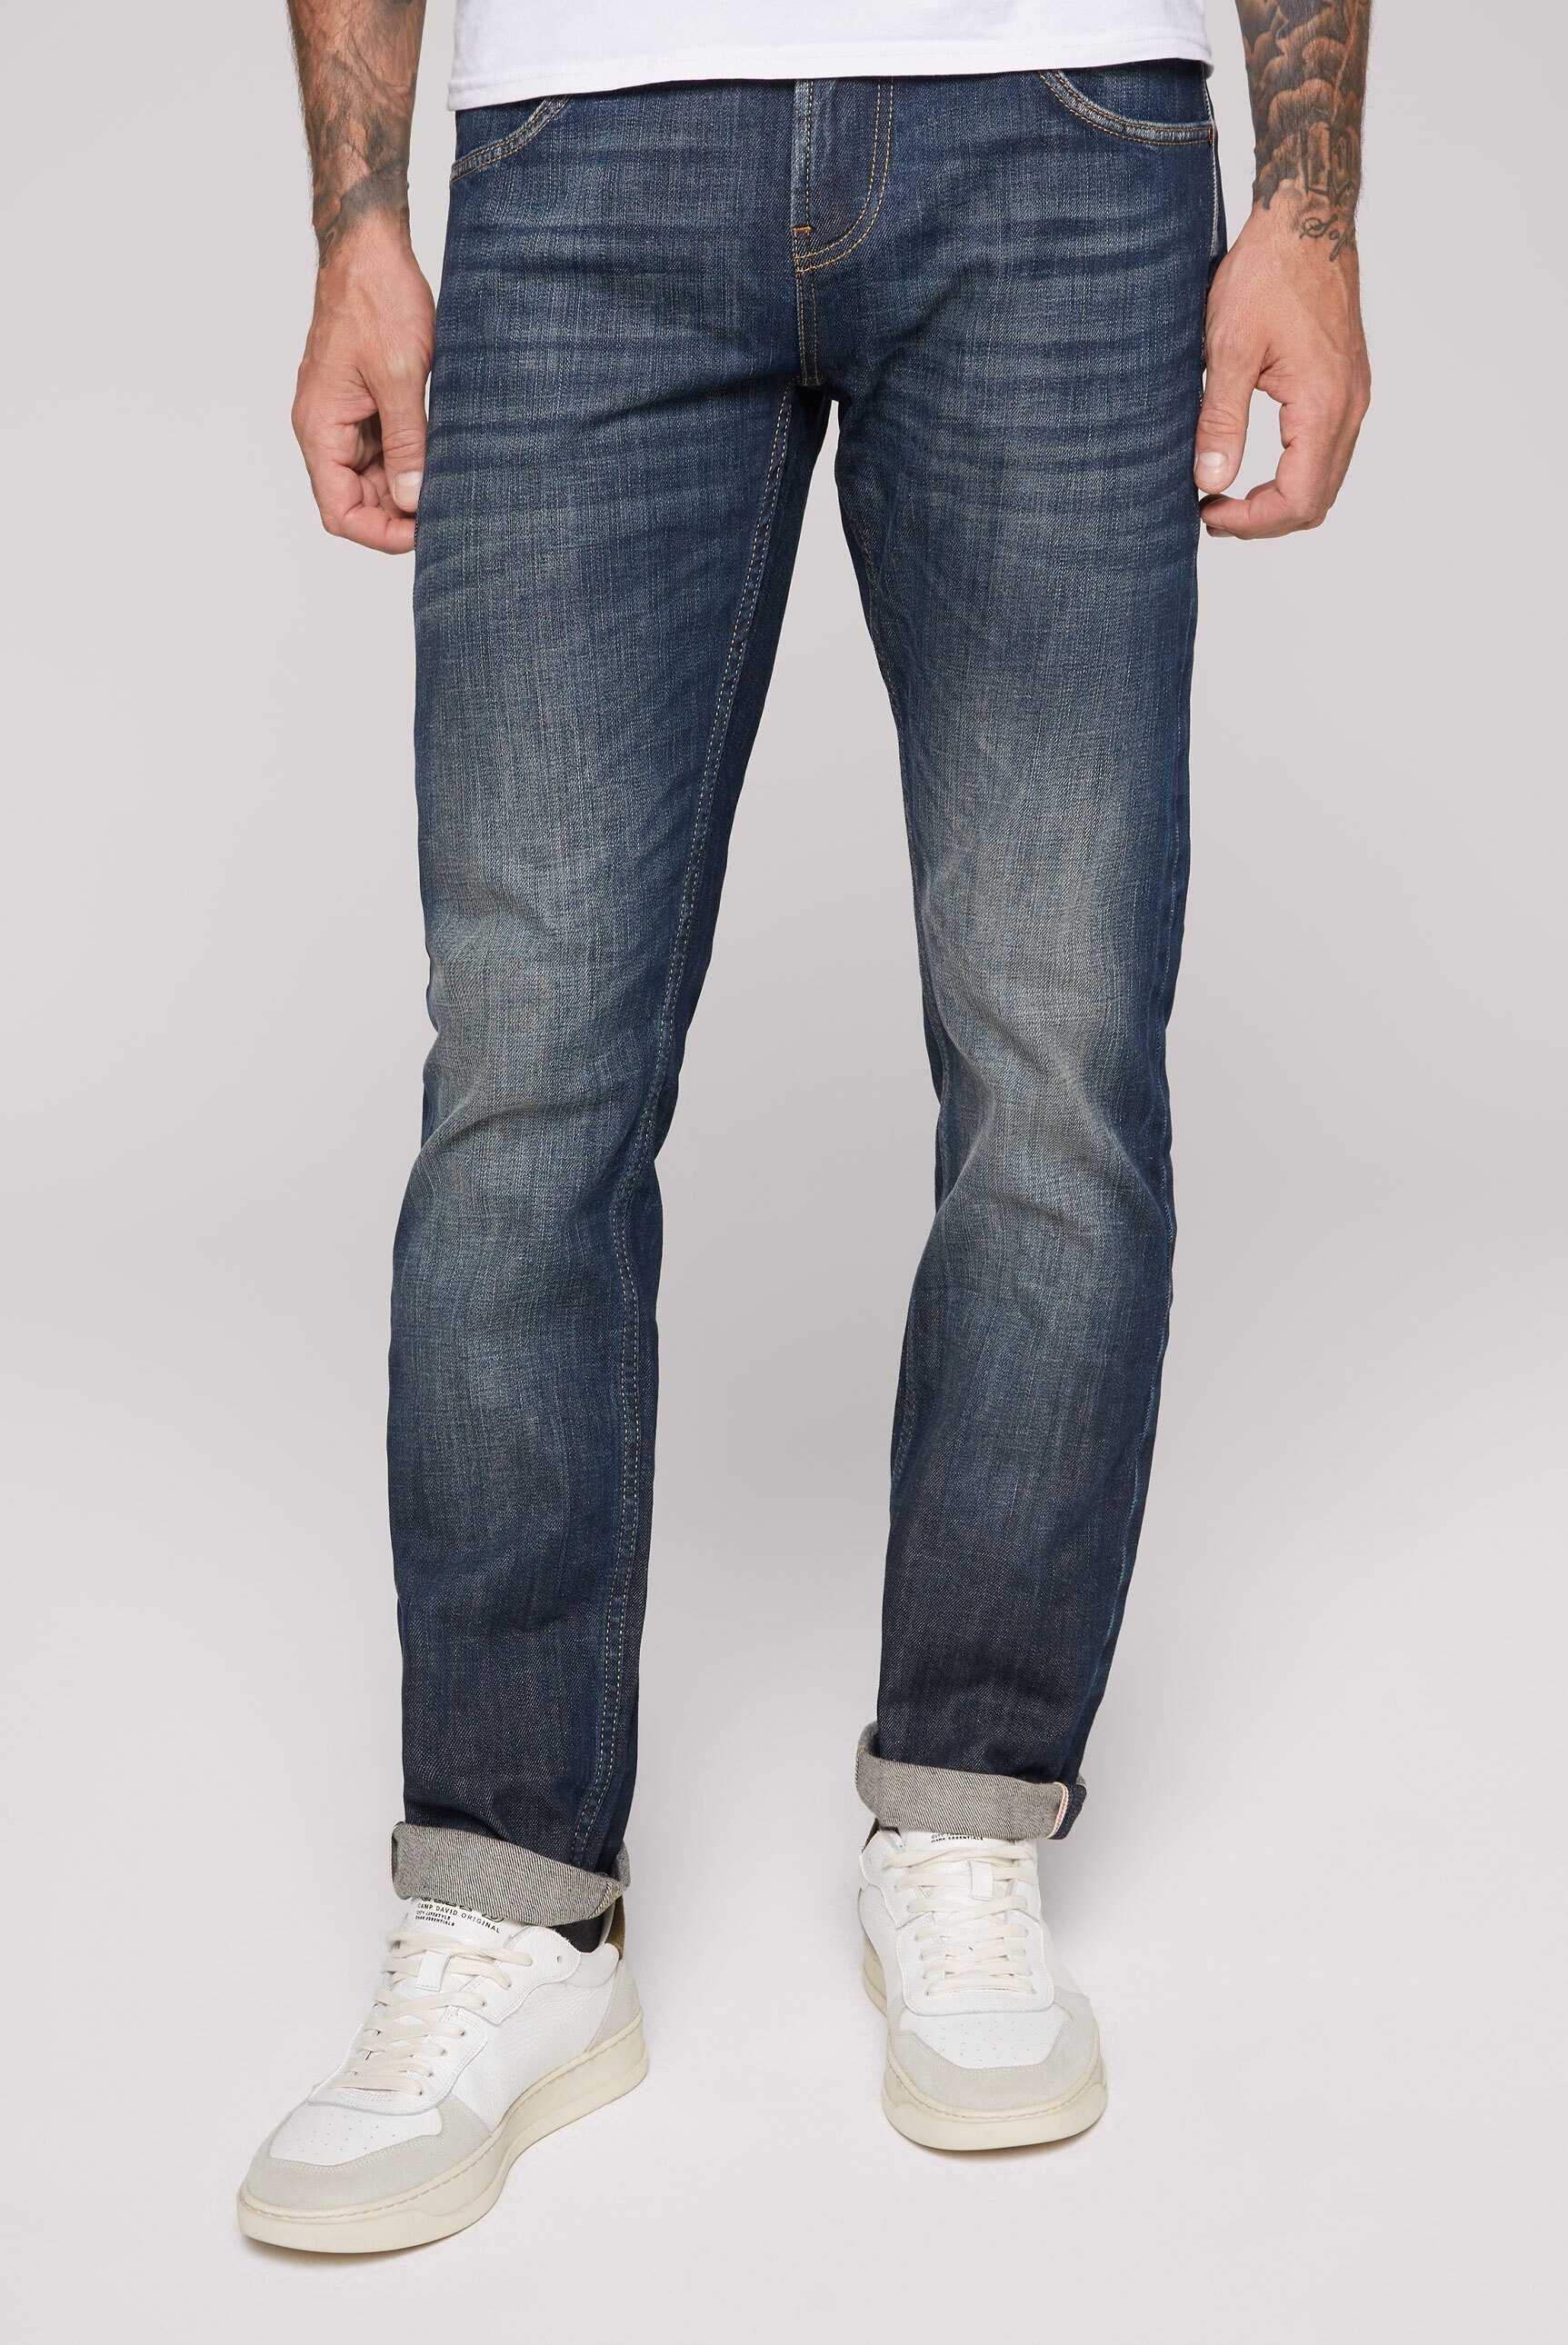 Leibhöhe Regular-fit-Jeans niedriger CAMP DAVID mit